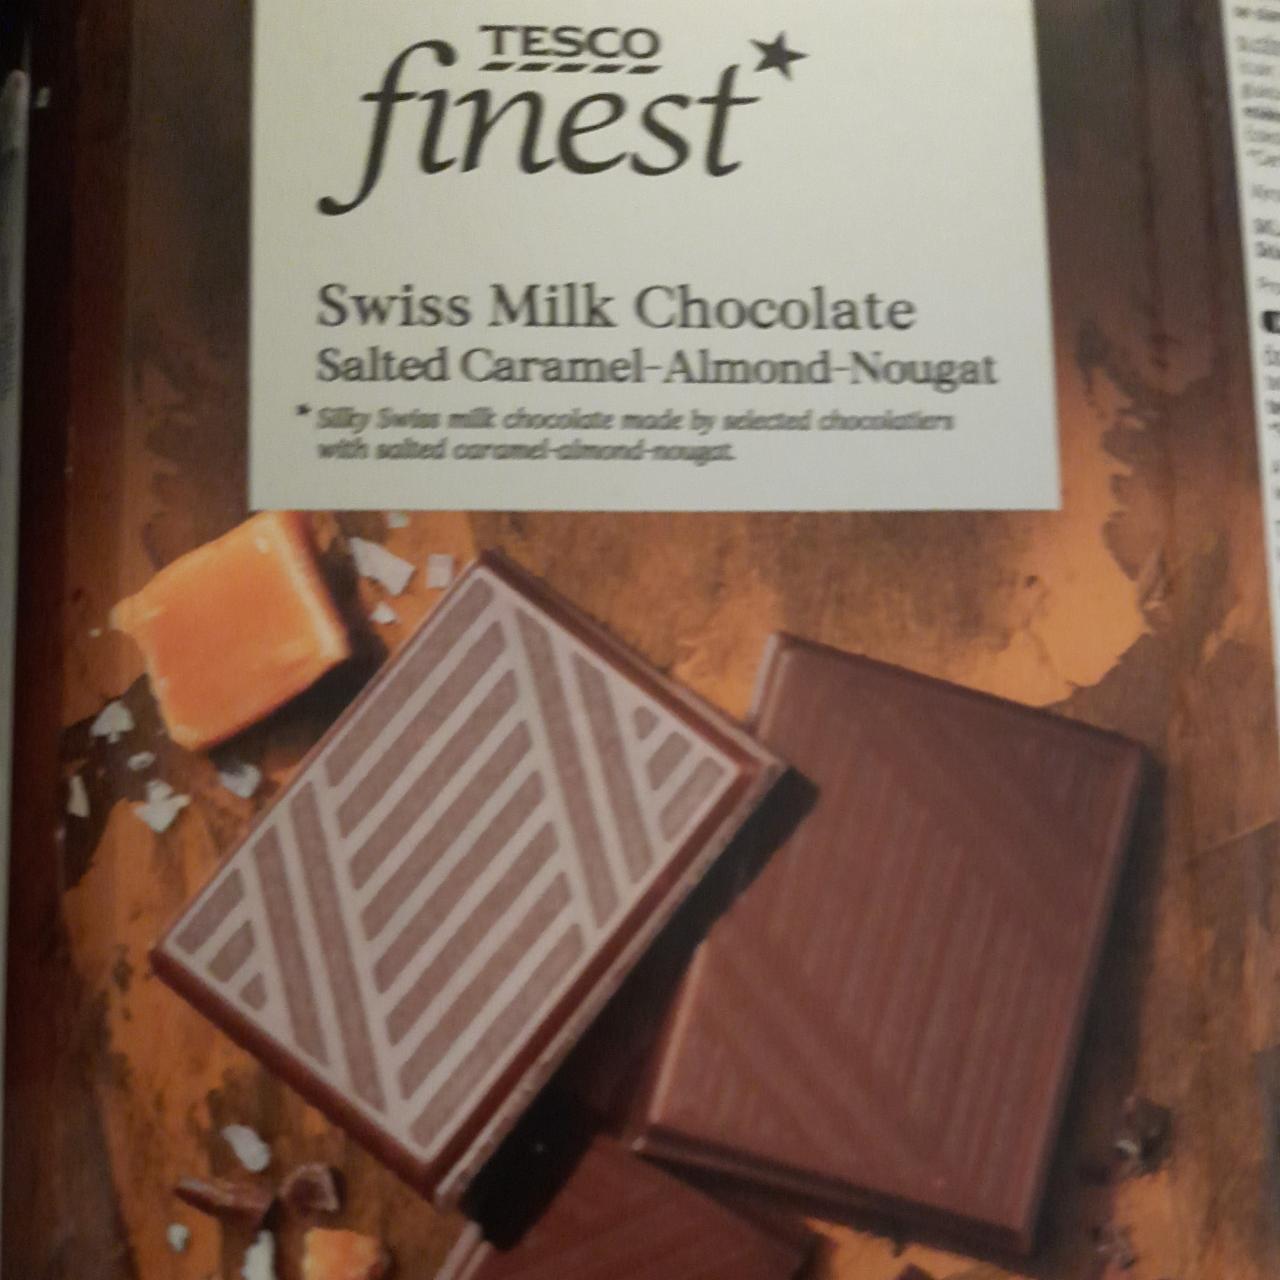 Képek - Swiss Milk Chocolate Salted Caramel-Almond-Nougat Tesco finest